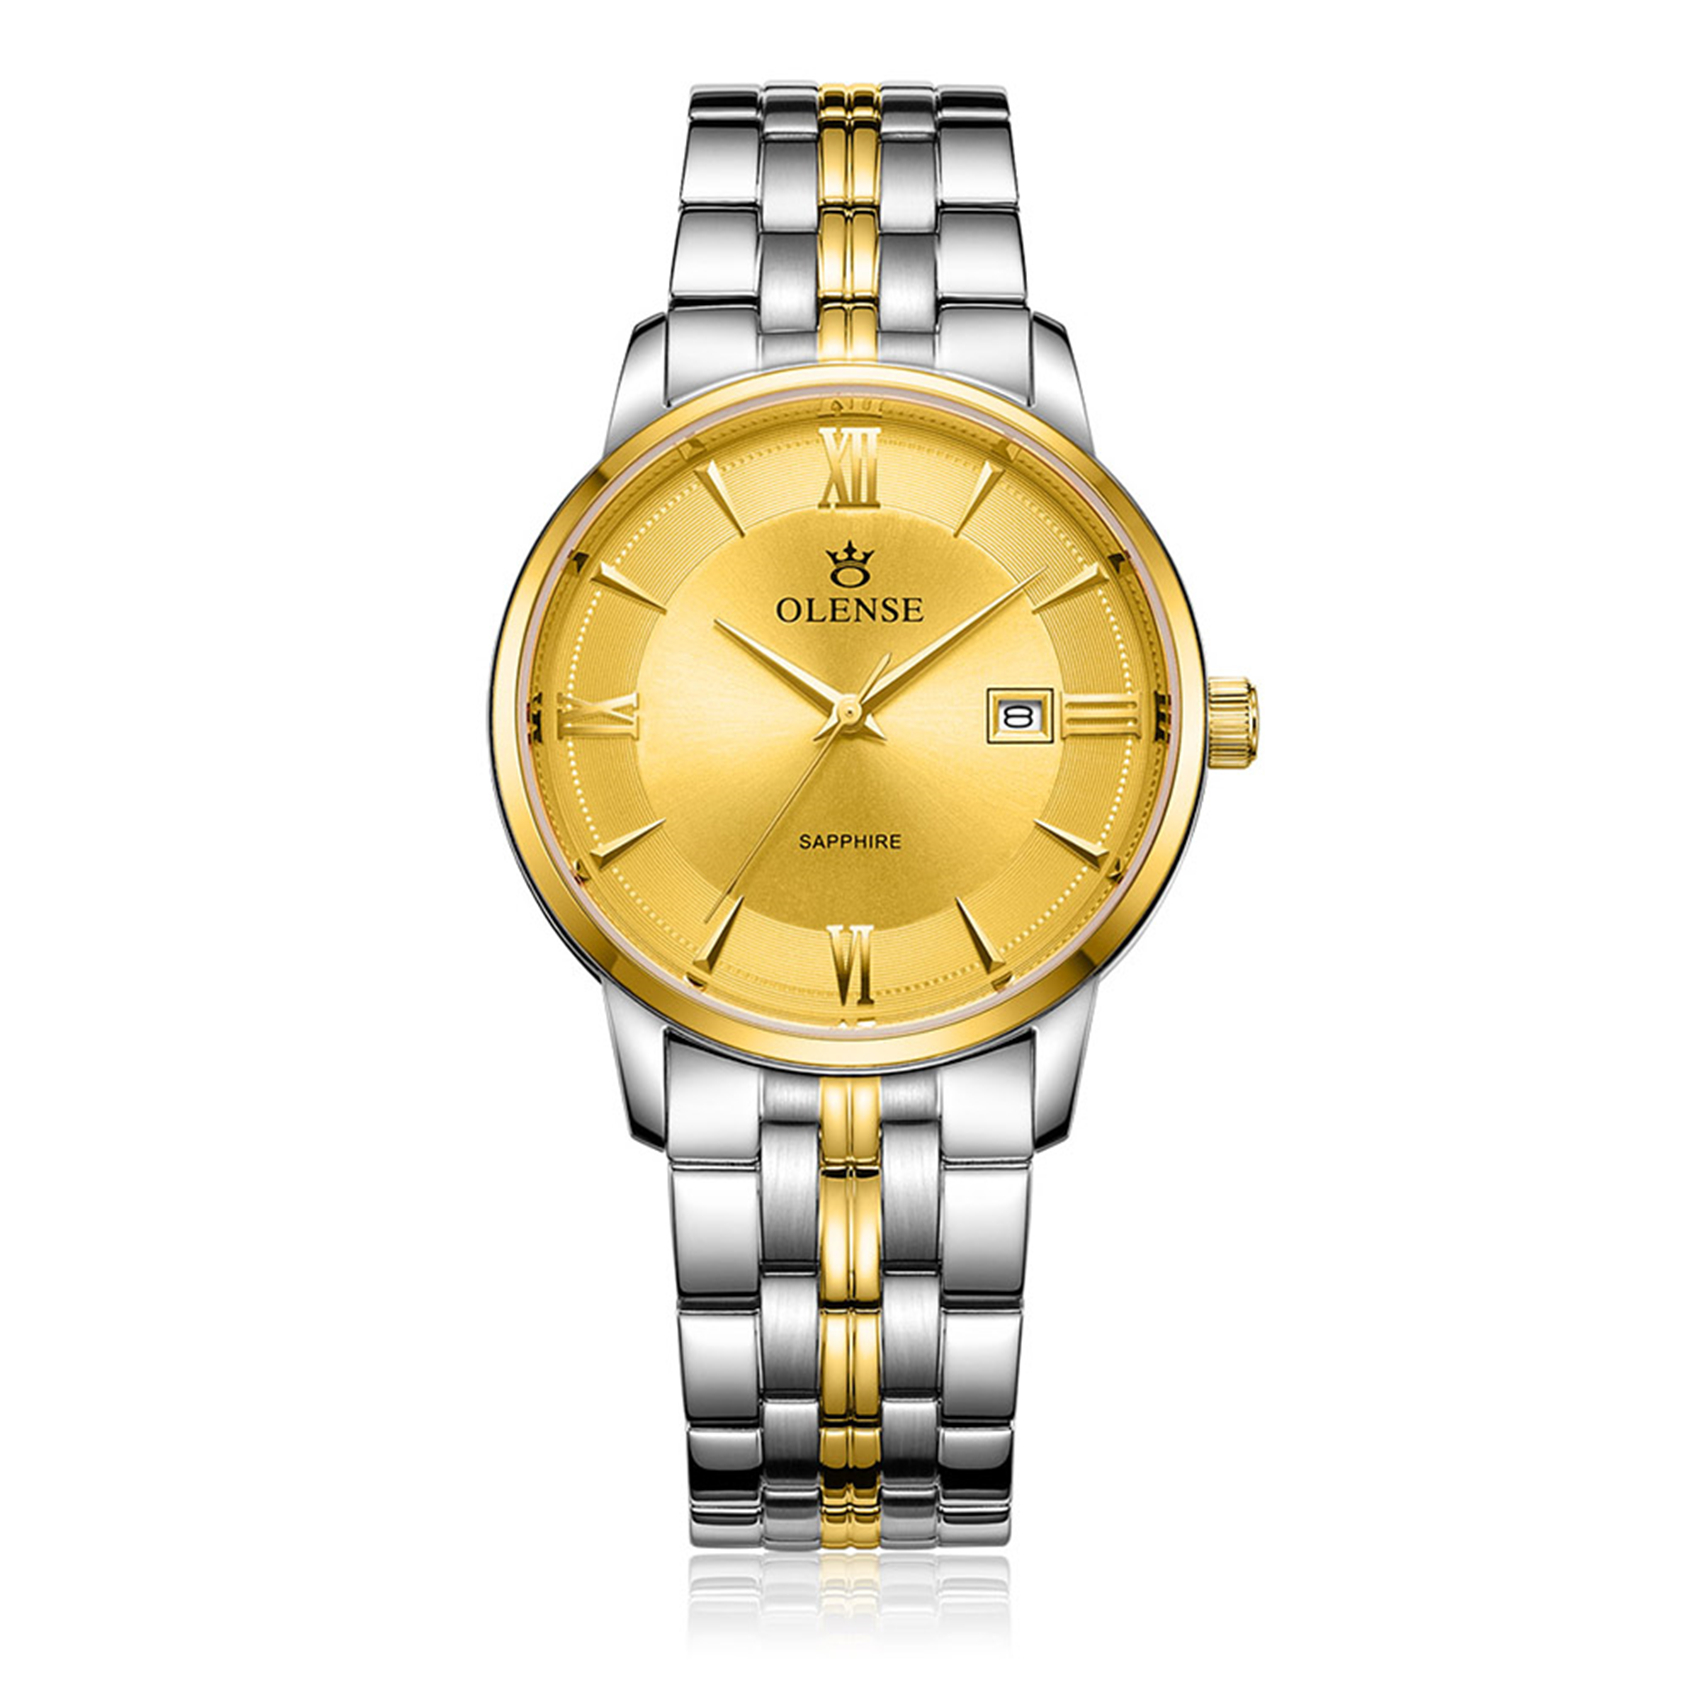 OLENSE - Men's Gold Wristwatch, Analog, Date, Bracelet, 39mm